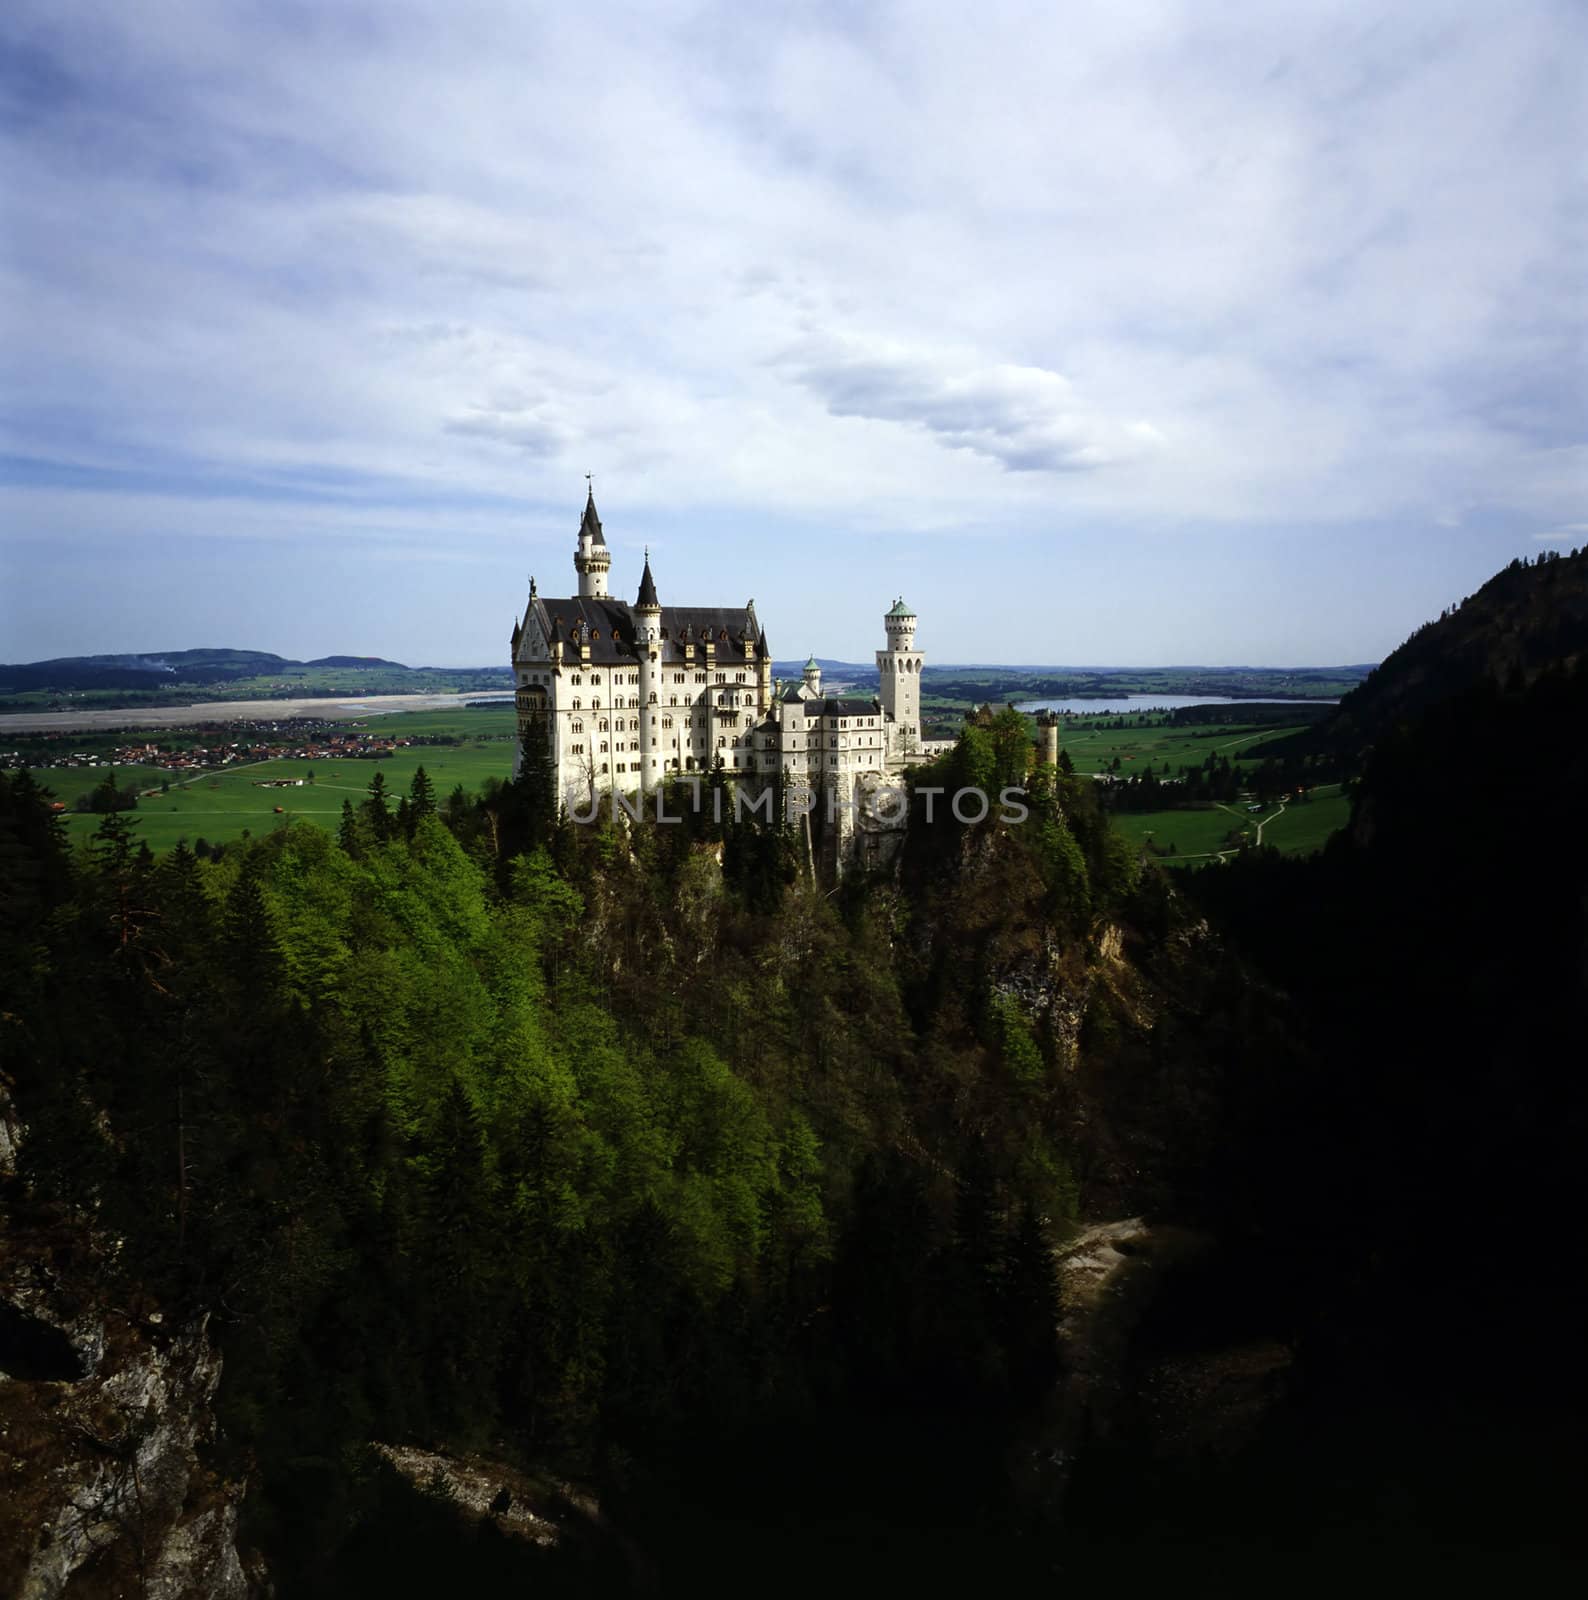 Castle Neuschwanstein, Germany by jol66